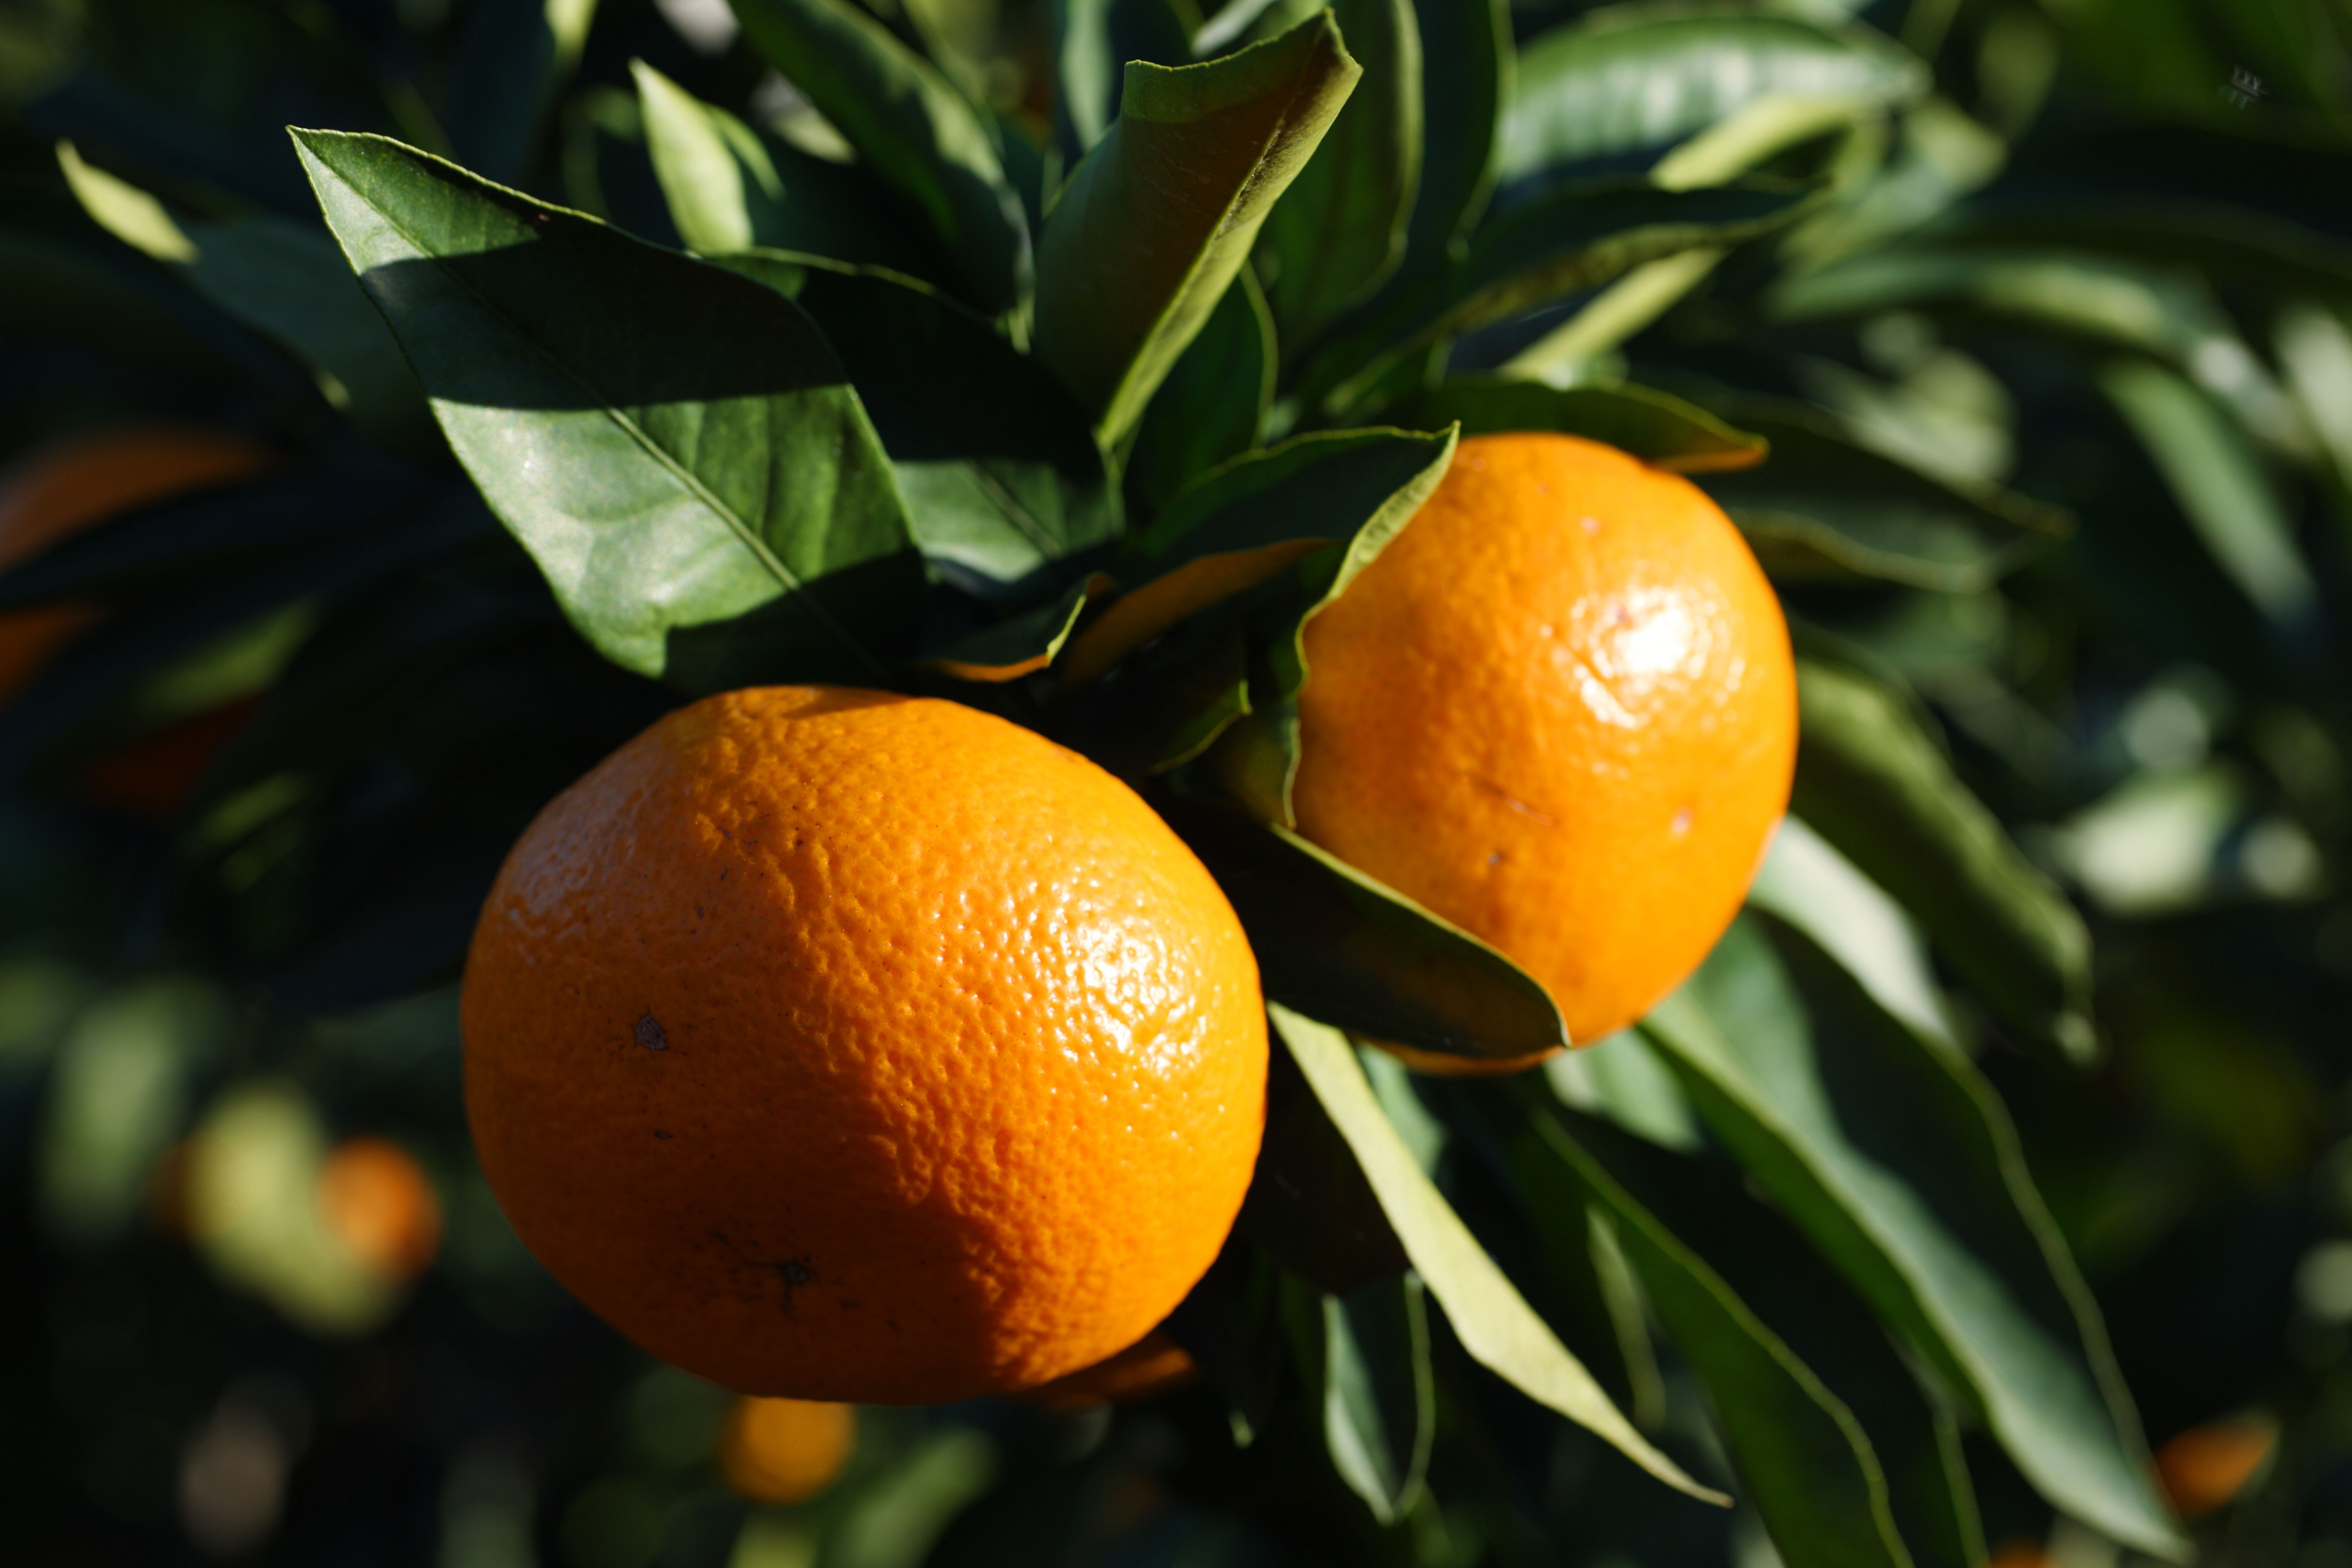 fruits, oranges - desktop wallpaper